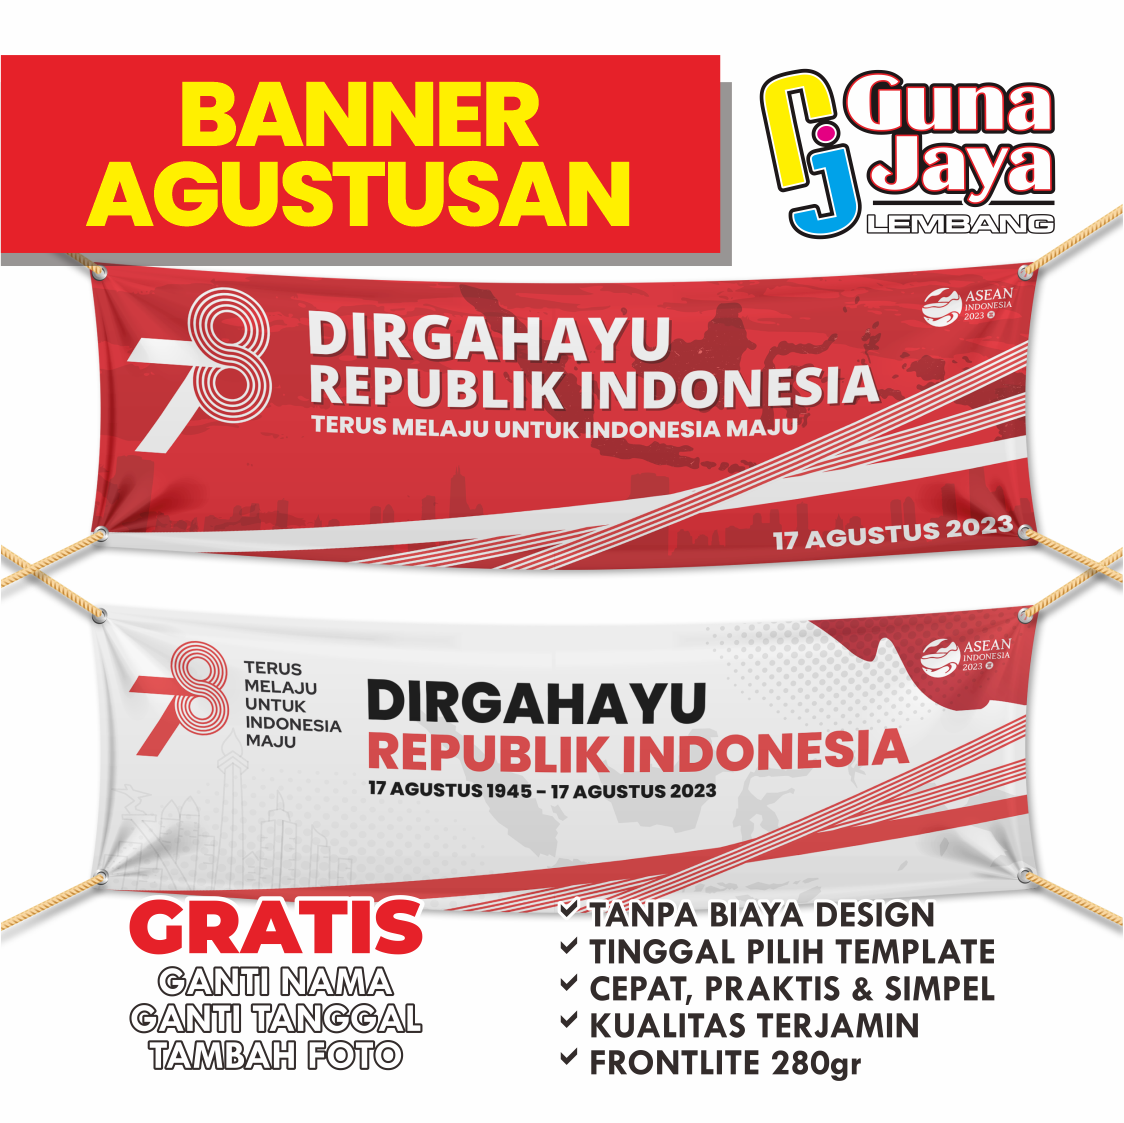 Banner Spanduk Agustusan 17 Agustus Hut Republik Indonesia Banner Dirgahayu Ri Gunajaya Printing 0006